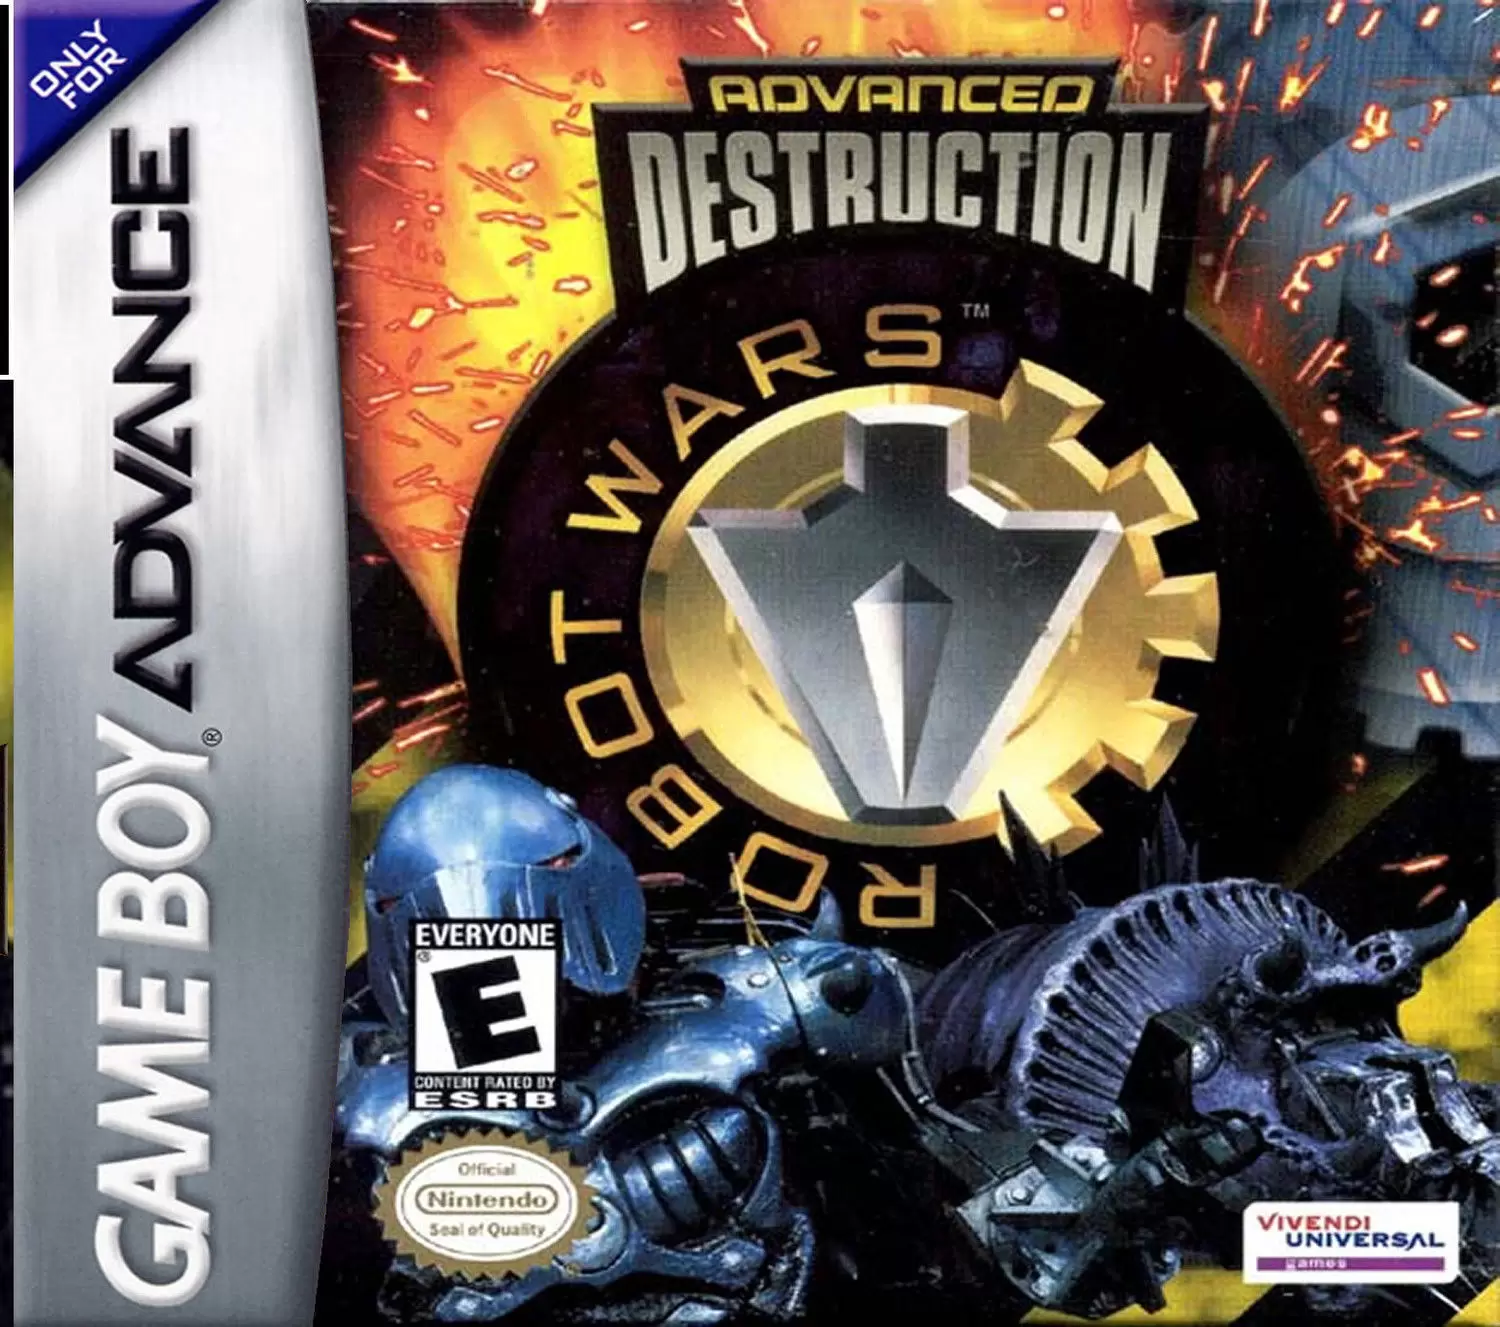 Game Boy Advance Games - Robot Wars: Advanced Destruction